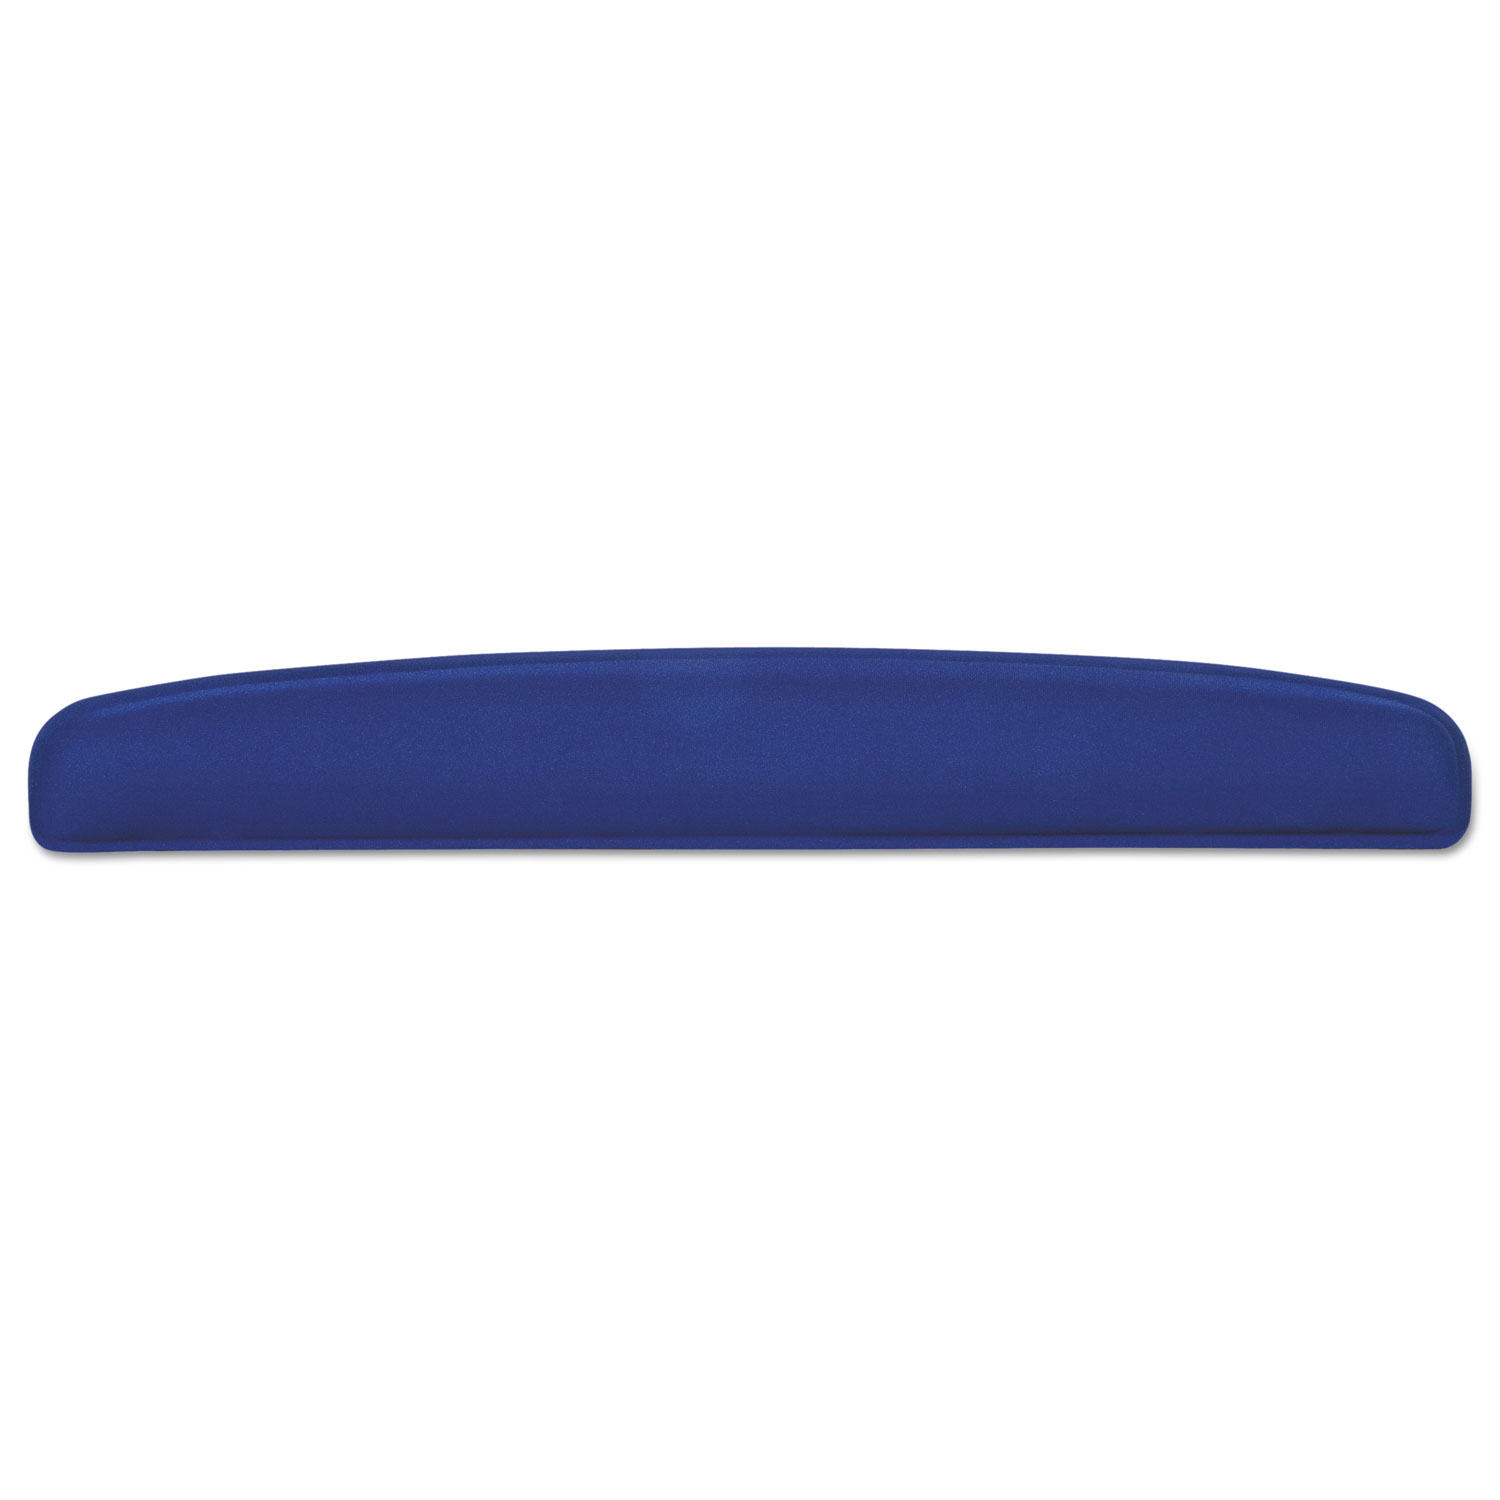  Allsop 30204 Memory Foam Wrist Rests, 2 7/8 x 18 x 1, Blue (ASP30204) 